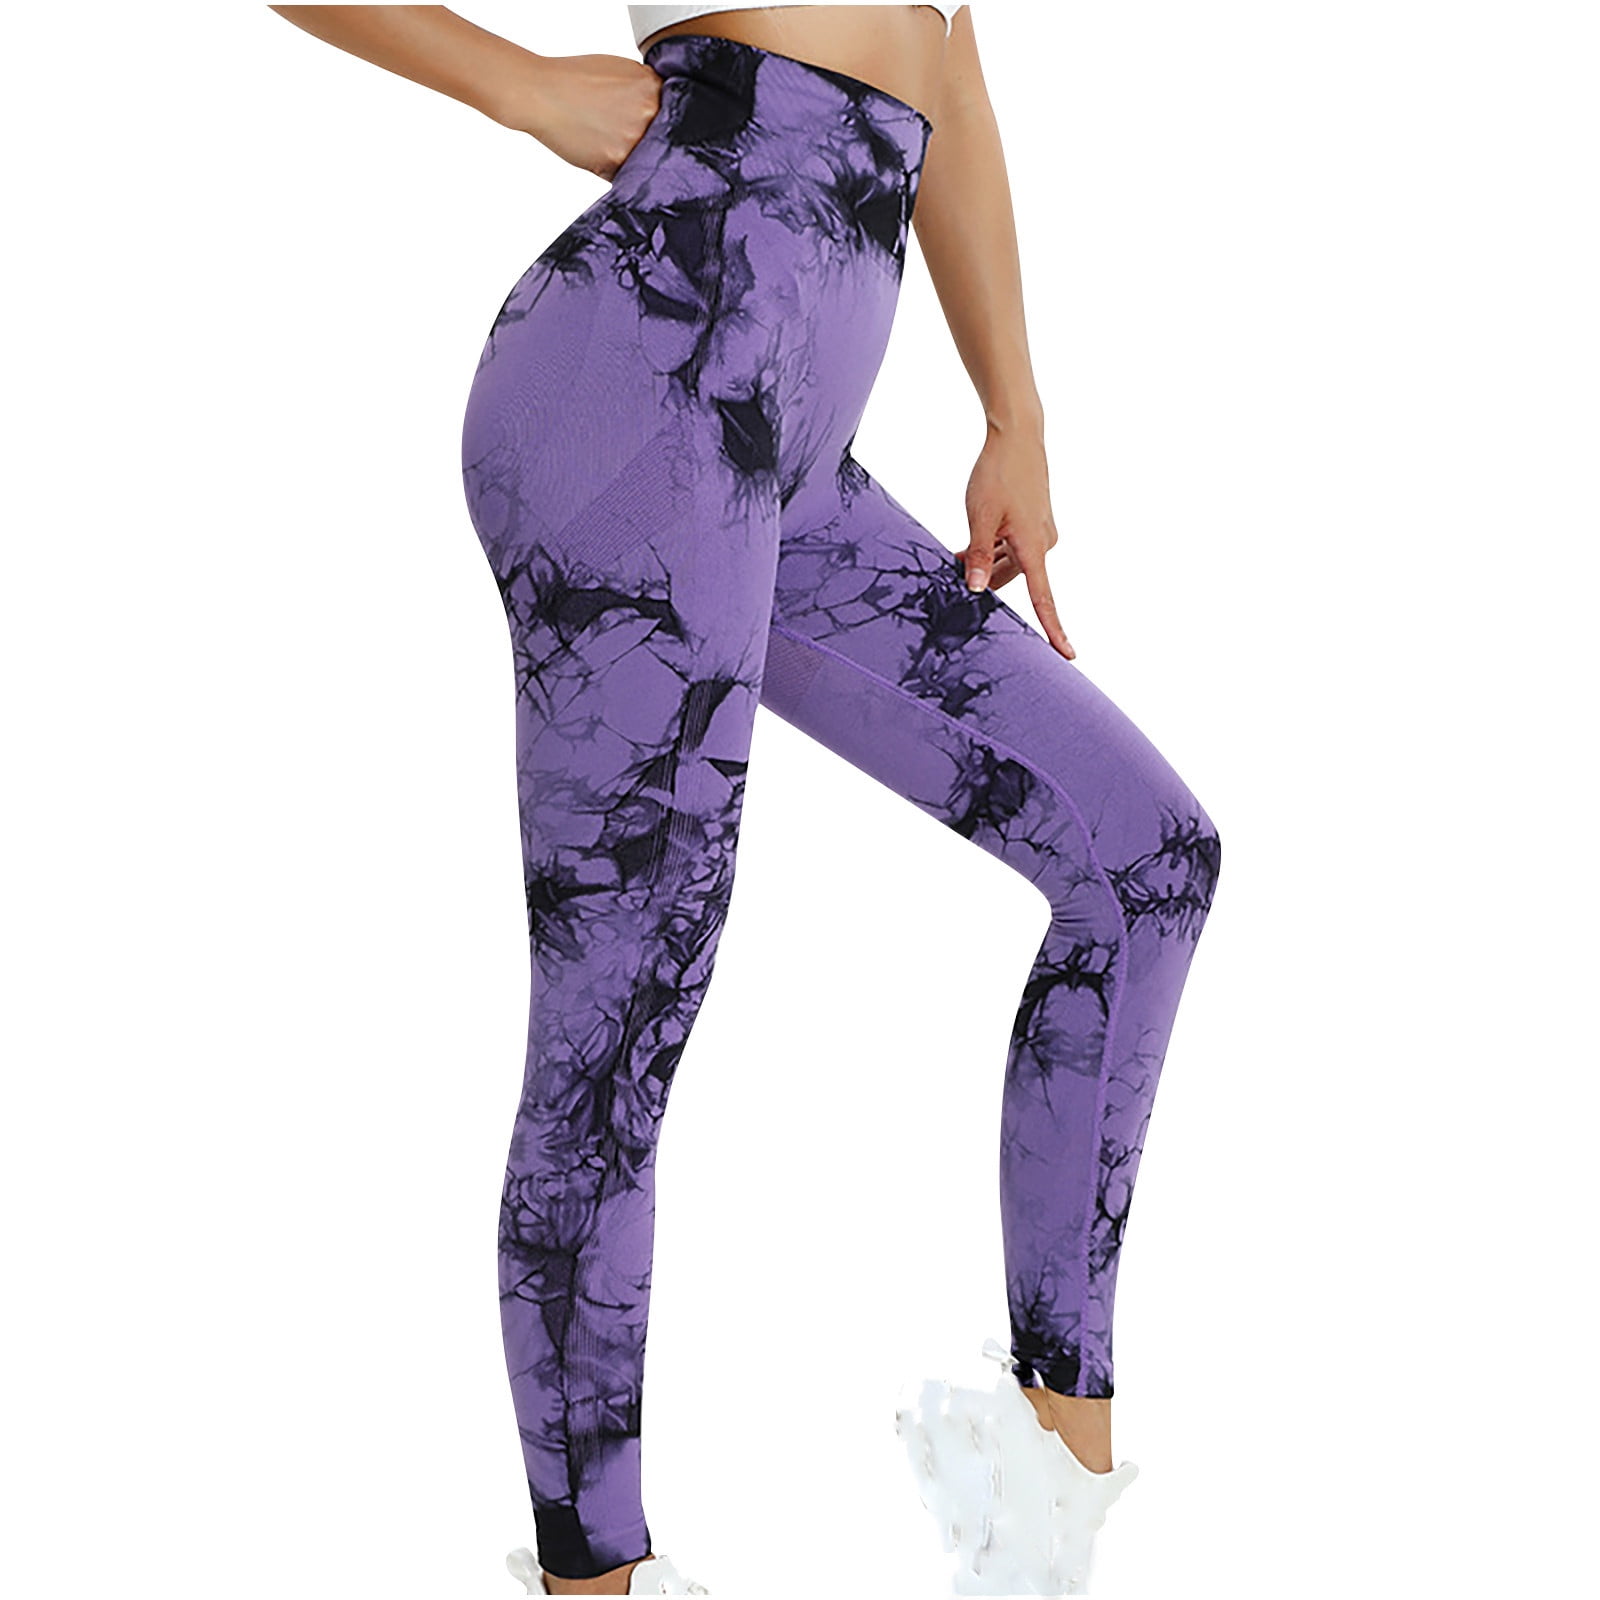 Hfyihgf Tie Dye Seamless Leggings for Women High Waist Yoga Pants Scrunch  Butt Lifting Elastic Tights(Purple,S) 